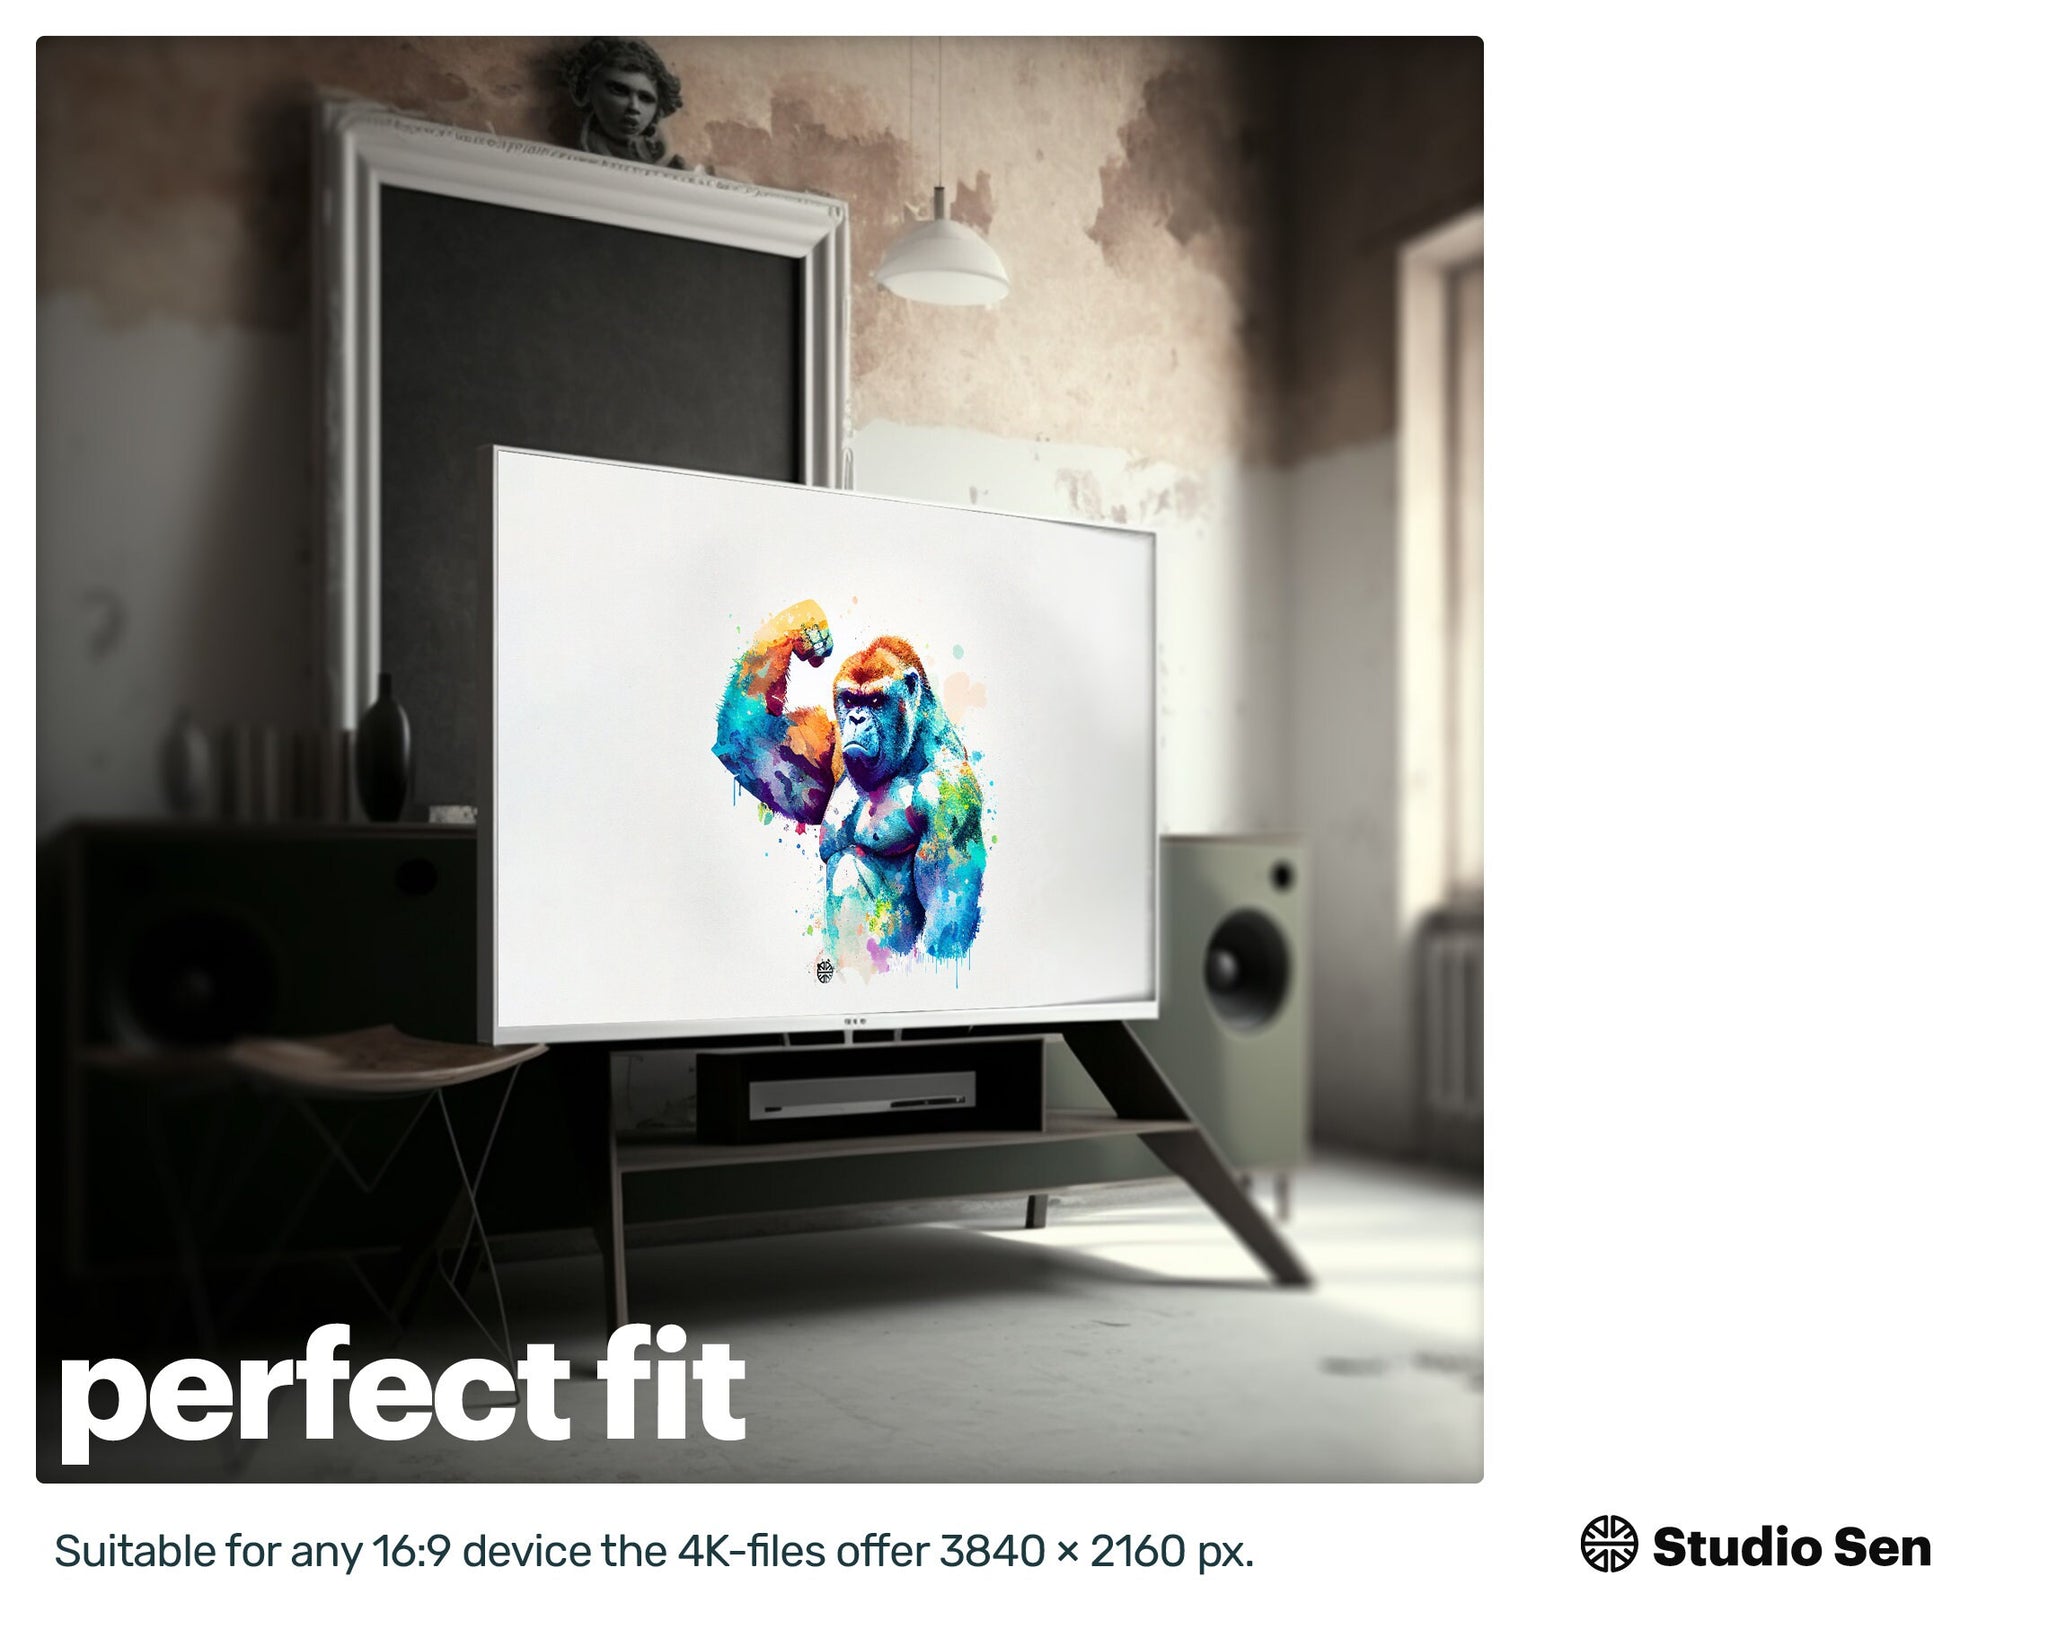 Samsung Art TV, Muscle Gorilla , premium download, drops and splashes, friendly wallpaper, art for kids